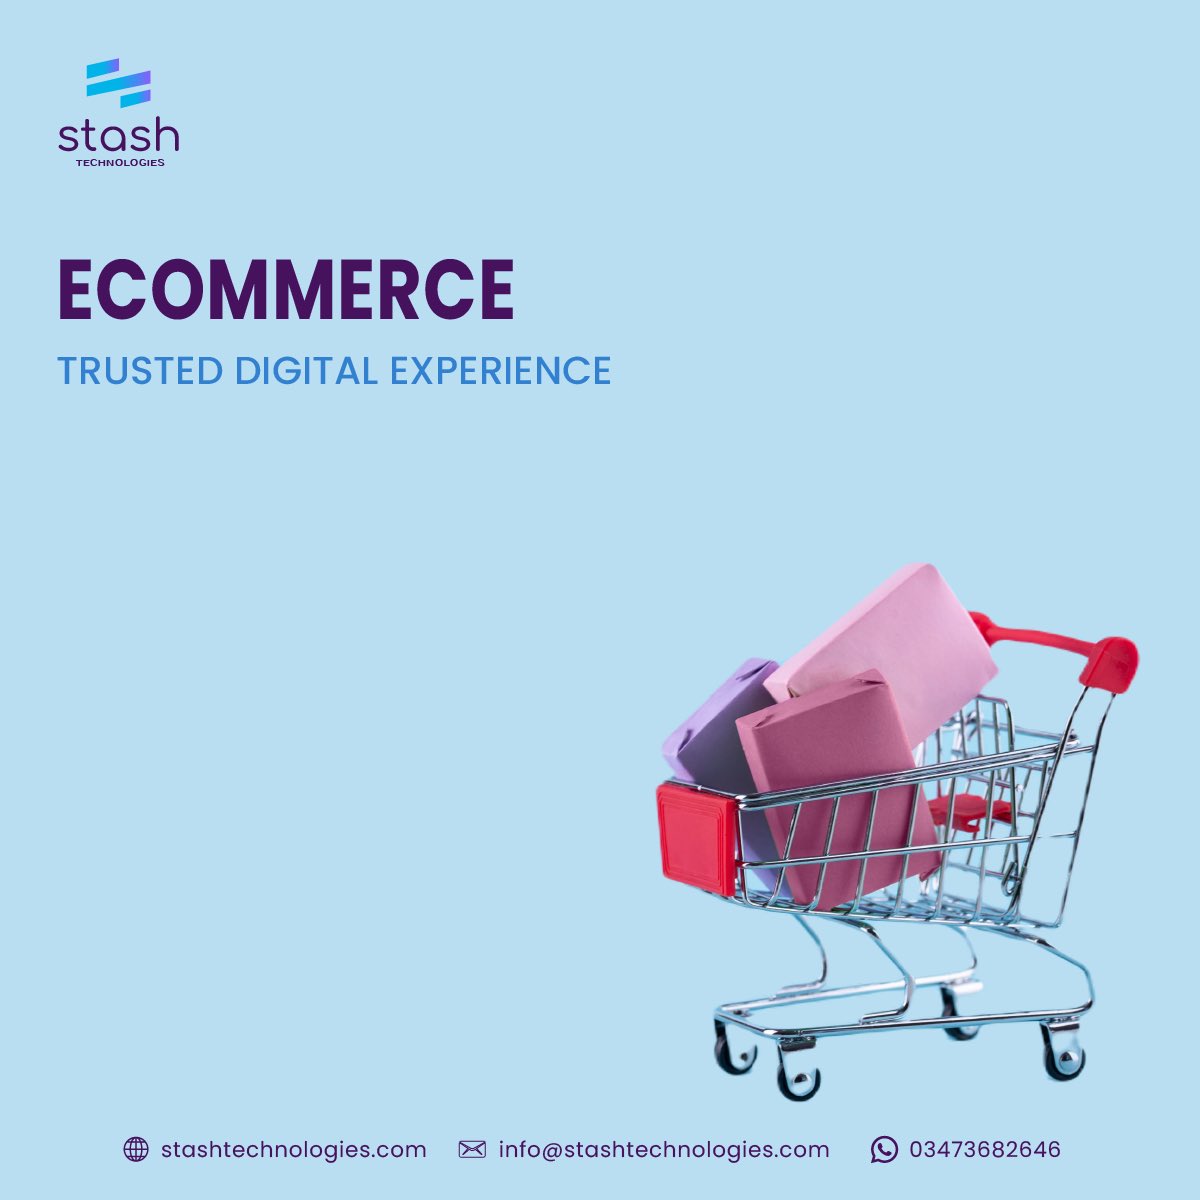 Get e-commerce trusted digital experience with Stash Technologies.

#stashtechnologies #softwarehouse #techhouse #techcompany #technology #techtrends #itconsultancy #itservicescompany #digitalmarketing #webdevelopment #wordpress #ecommerce #explore #business #pakistan #islamabad